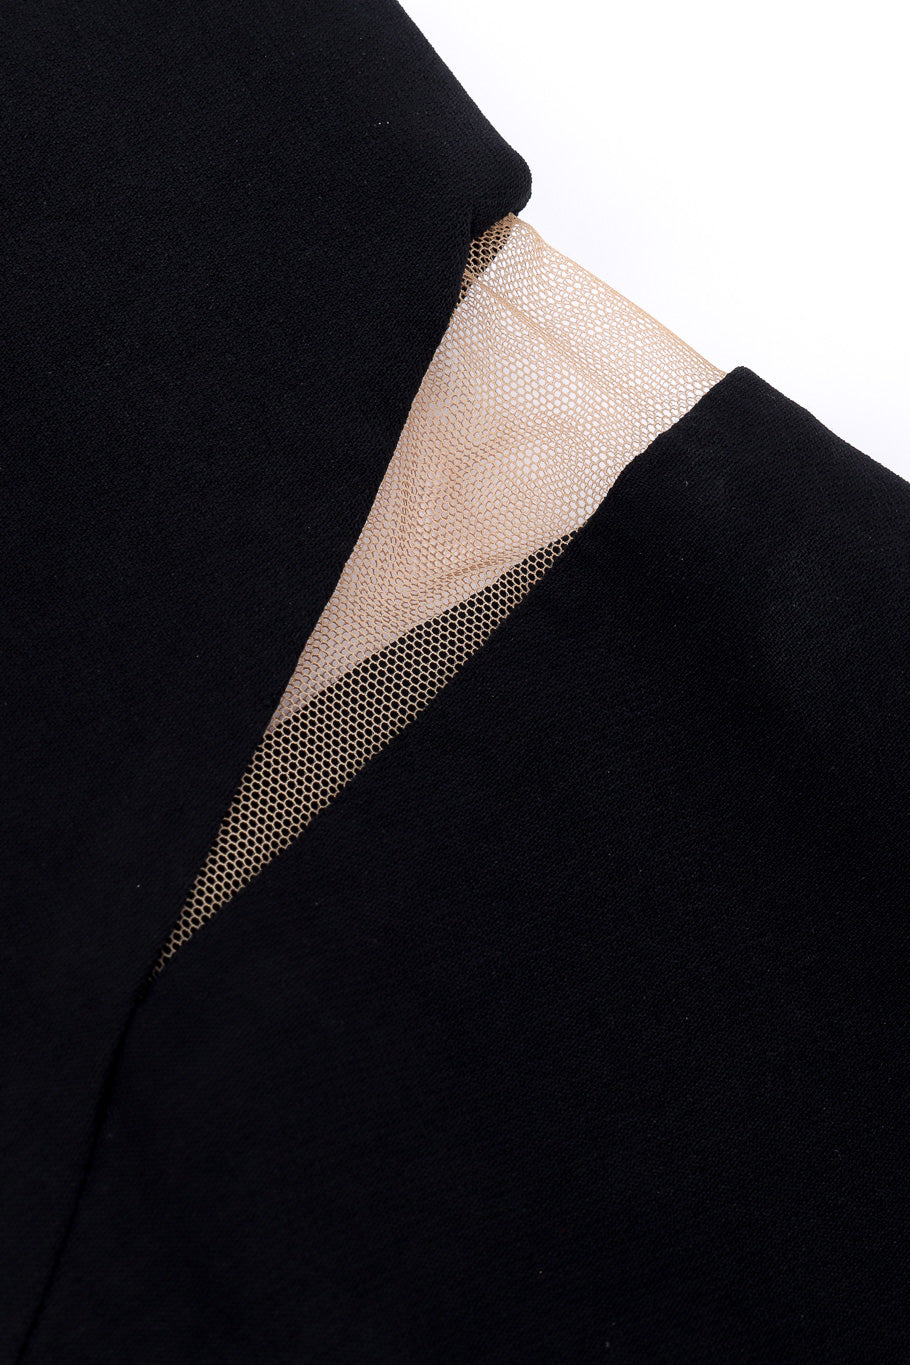 Versace Asymmetric Cut-Out Dress mesh panel closeup @Recessla